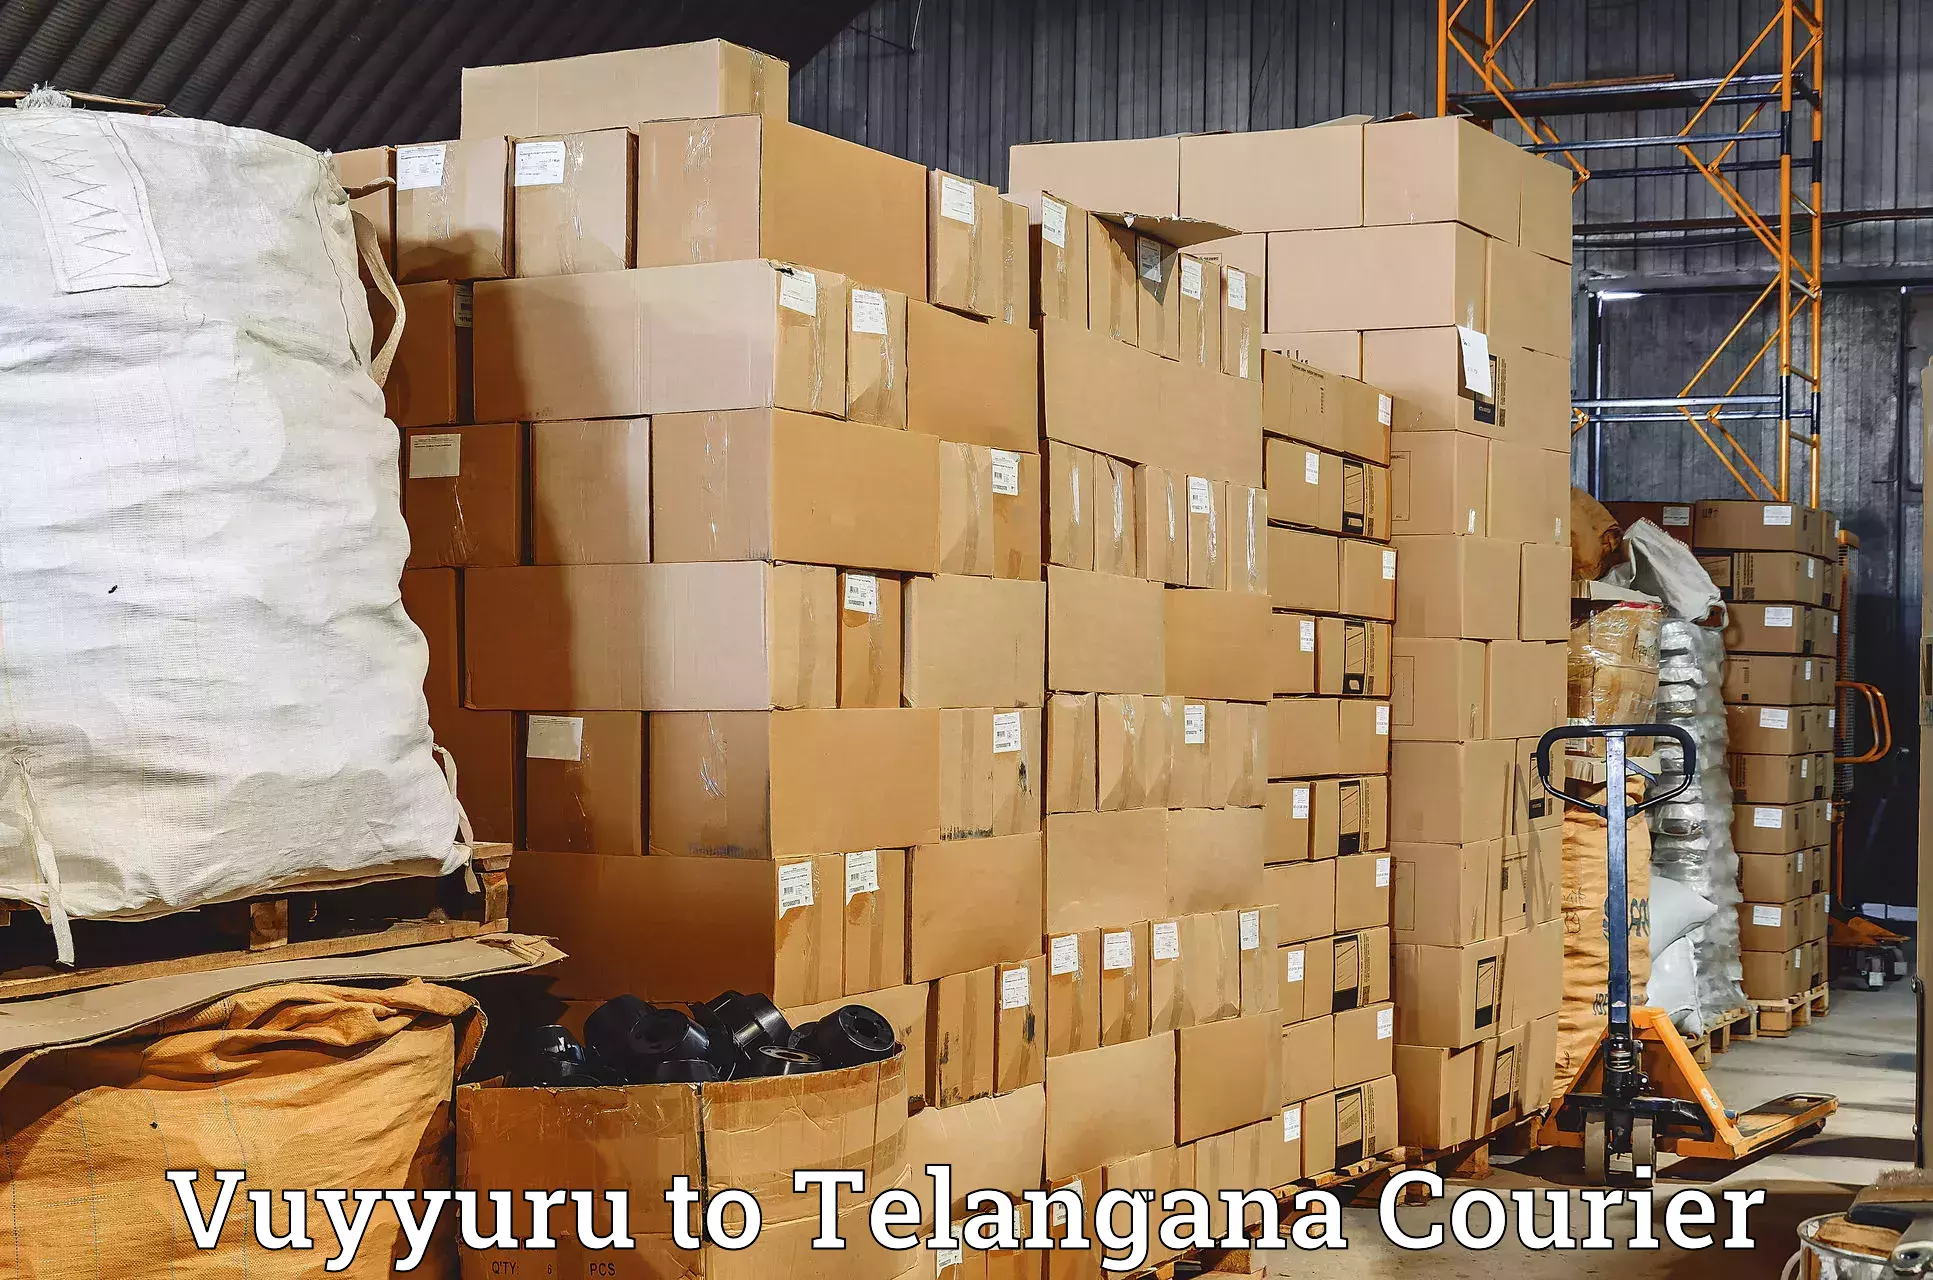 Round-the-clock parcel delivery Vuyyuru to Vikarabad